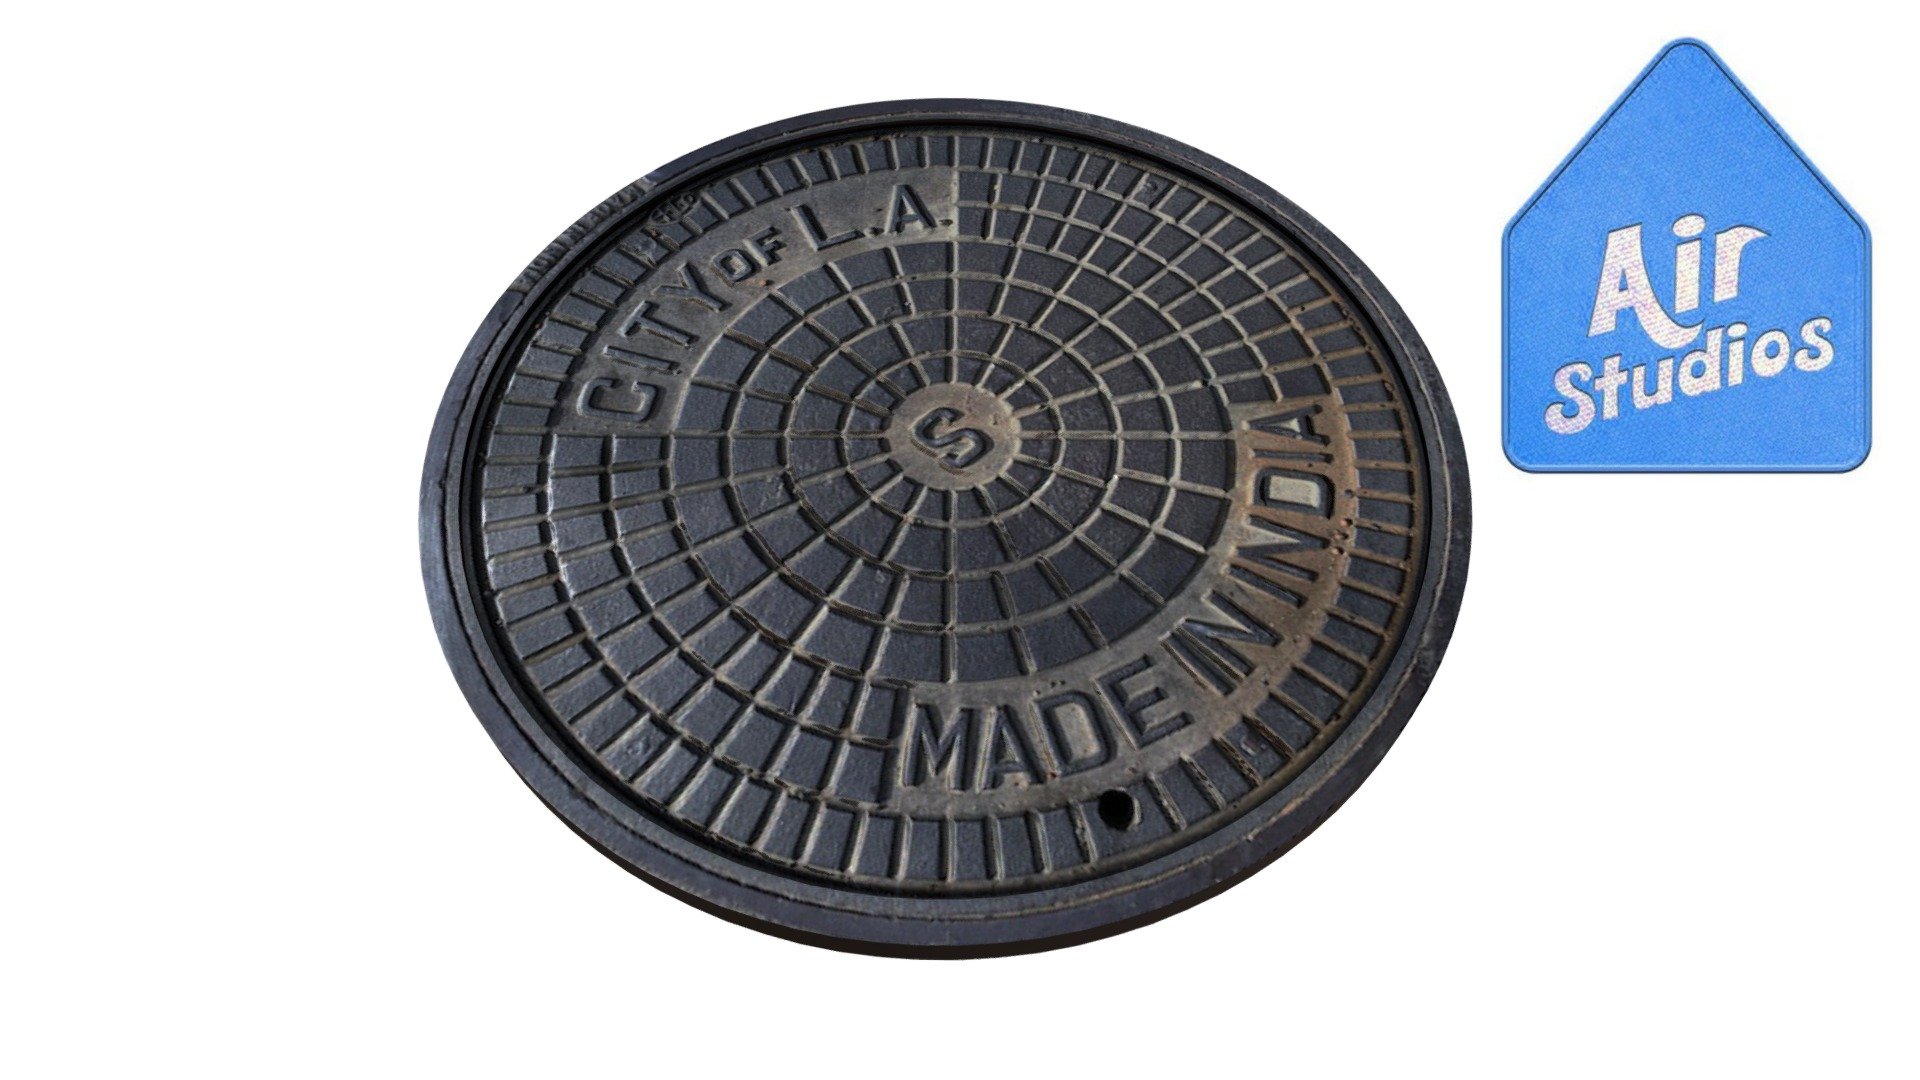 La Manhole Cover
Made in Maya - LA Manhole Cover - Buy Royalty Free 3D model by AirStudios (@sebbe613) 3d model